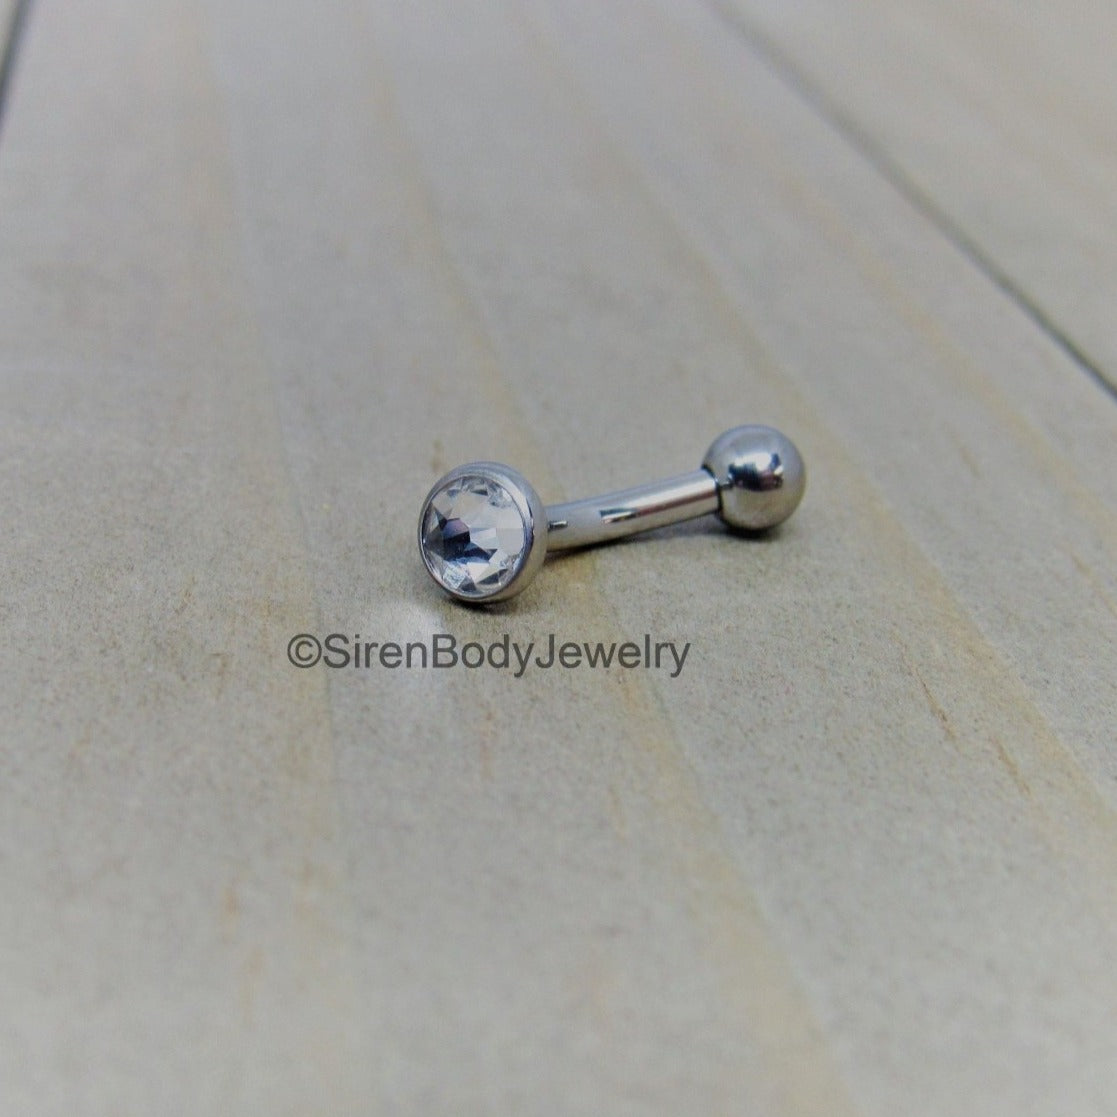 VCH jewelry titanium 14g internally threaded curved barbell 3/8"-1/2" length 4mm CZ gem - SirenBodyJewelry